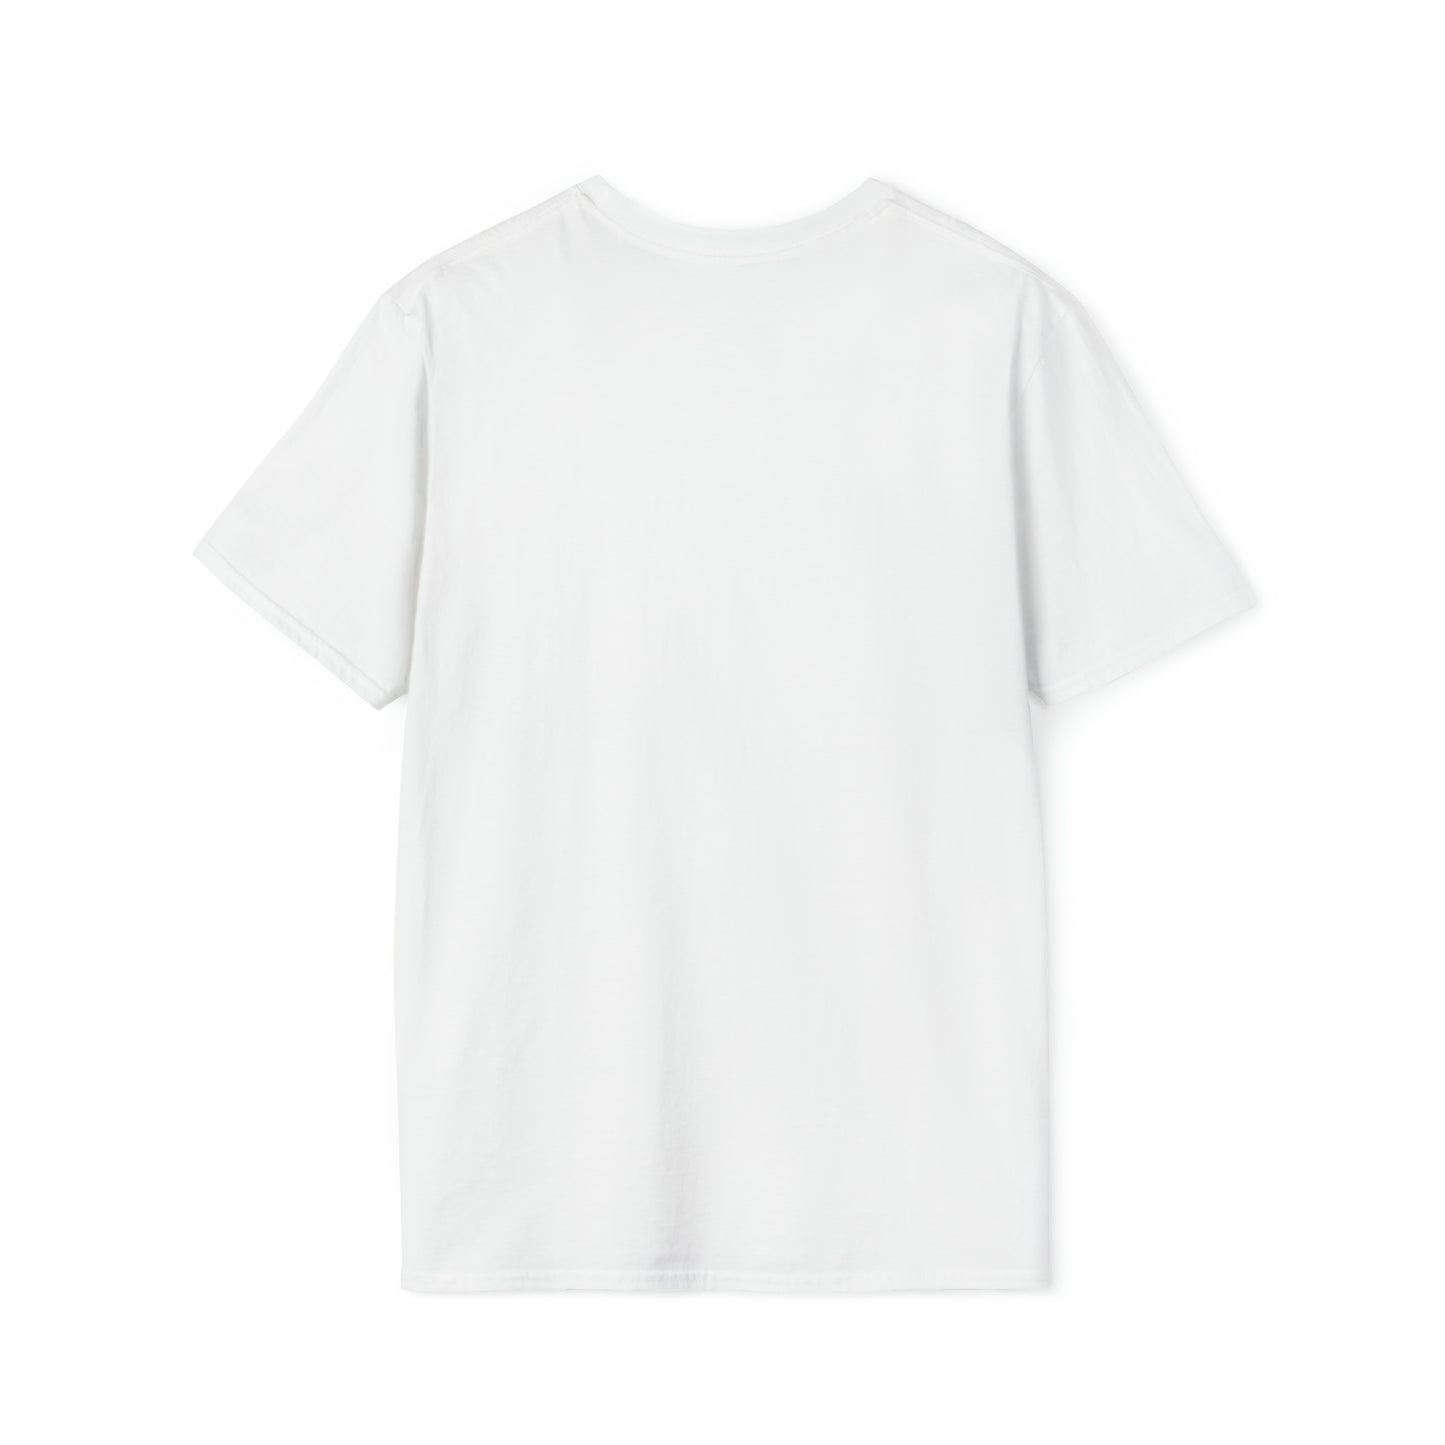 Métele Bellaco - Unisex Softstyle T-Shirt